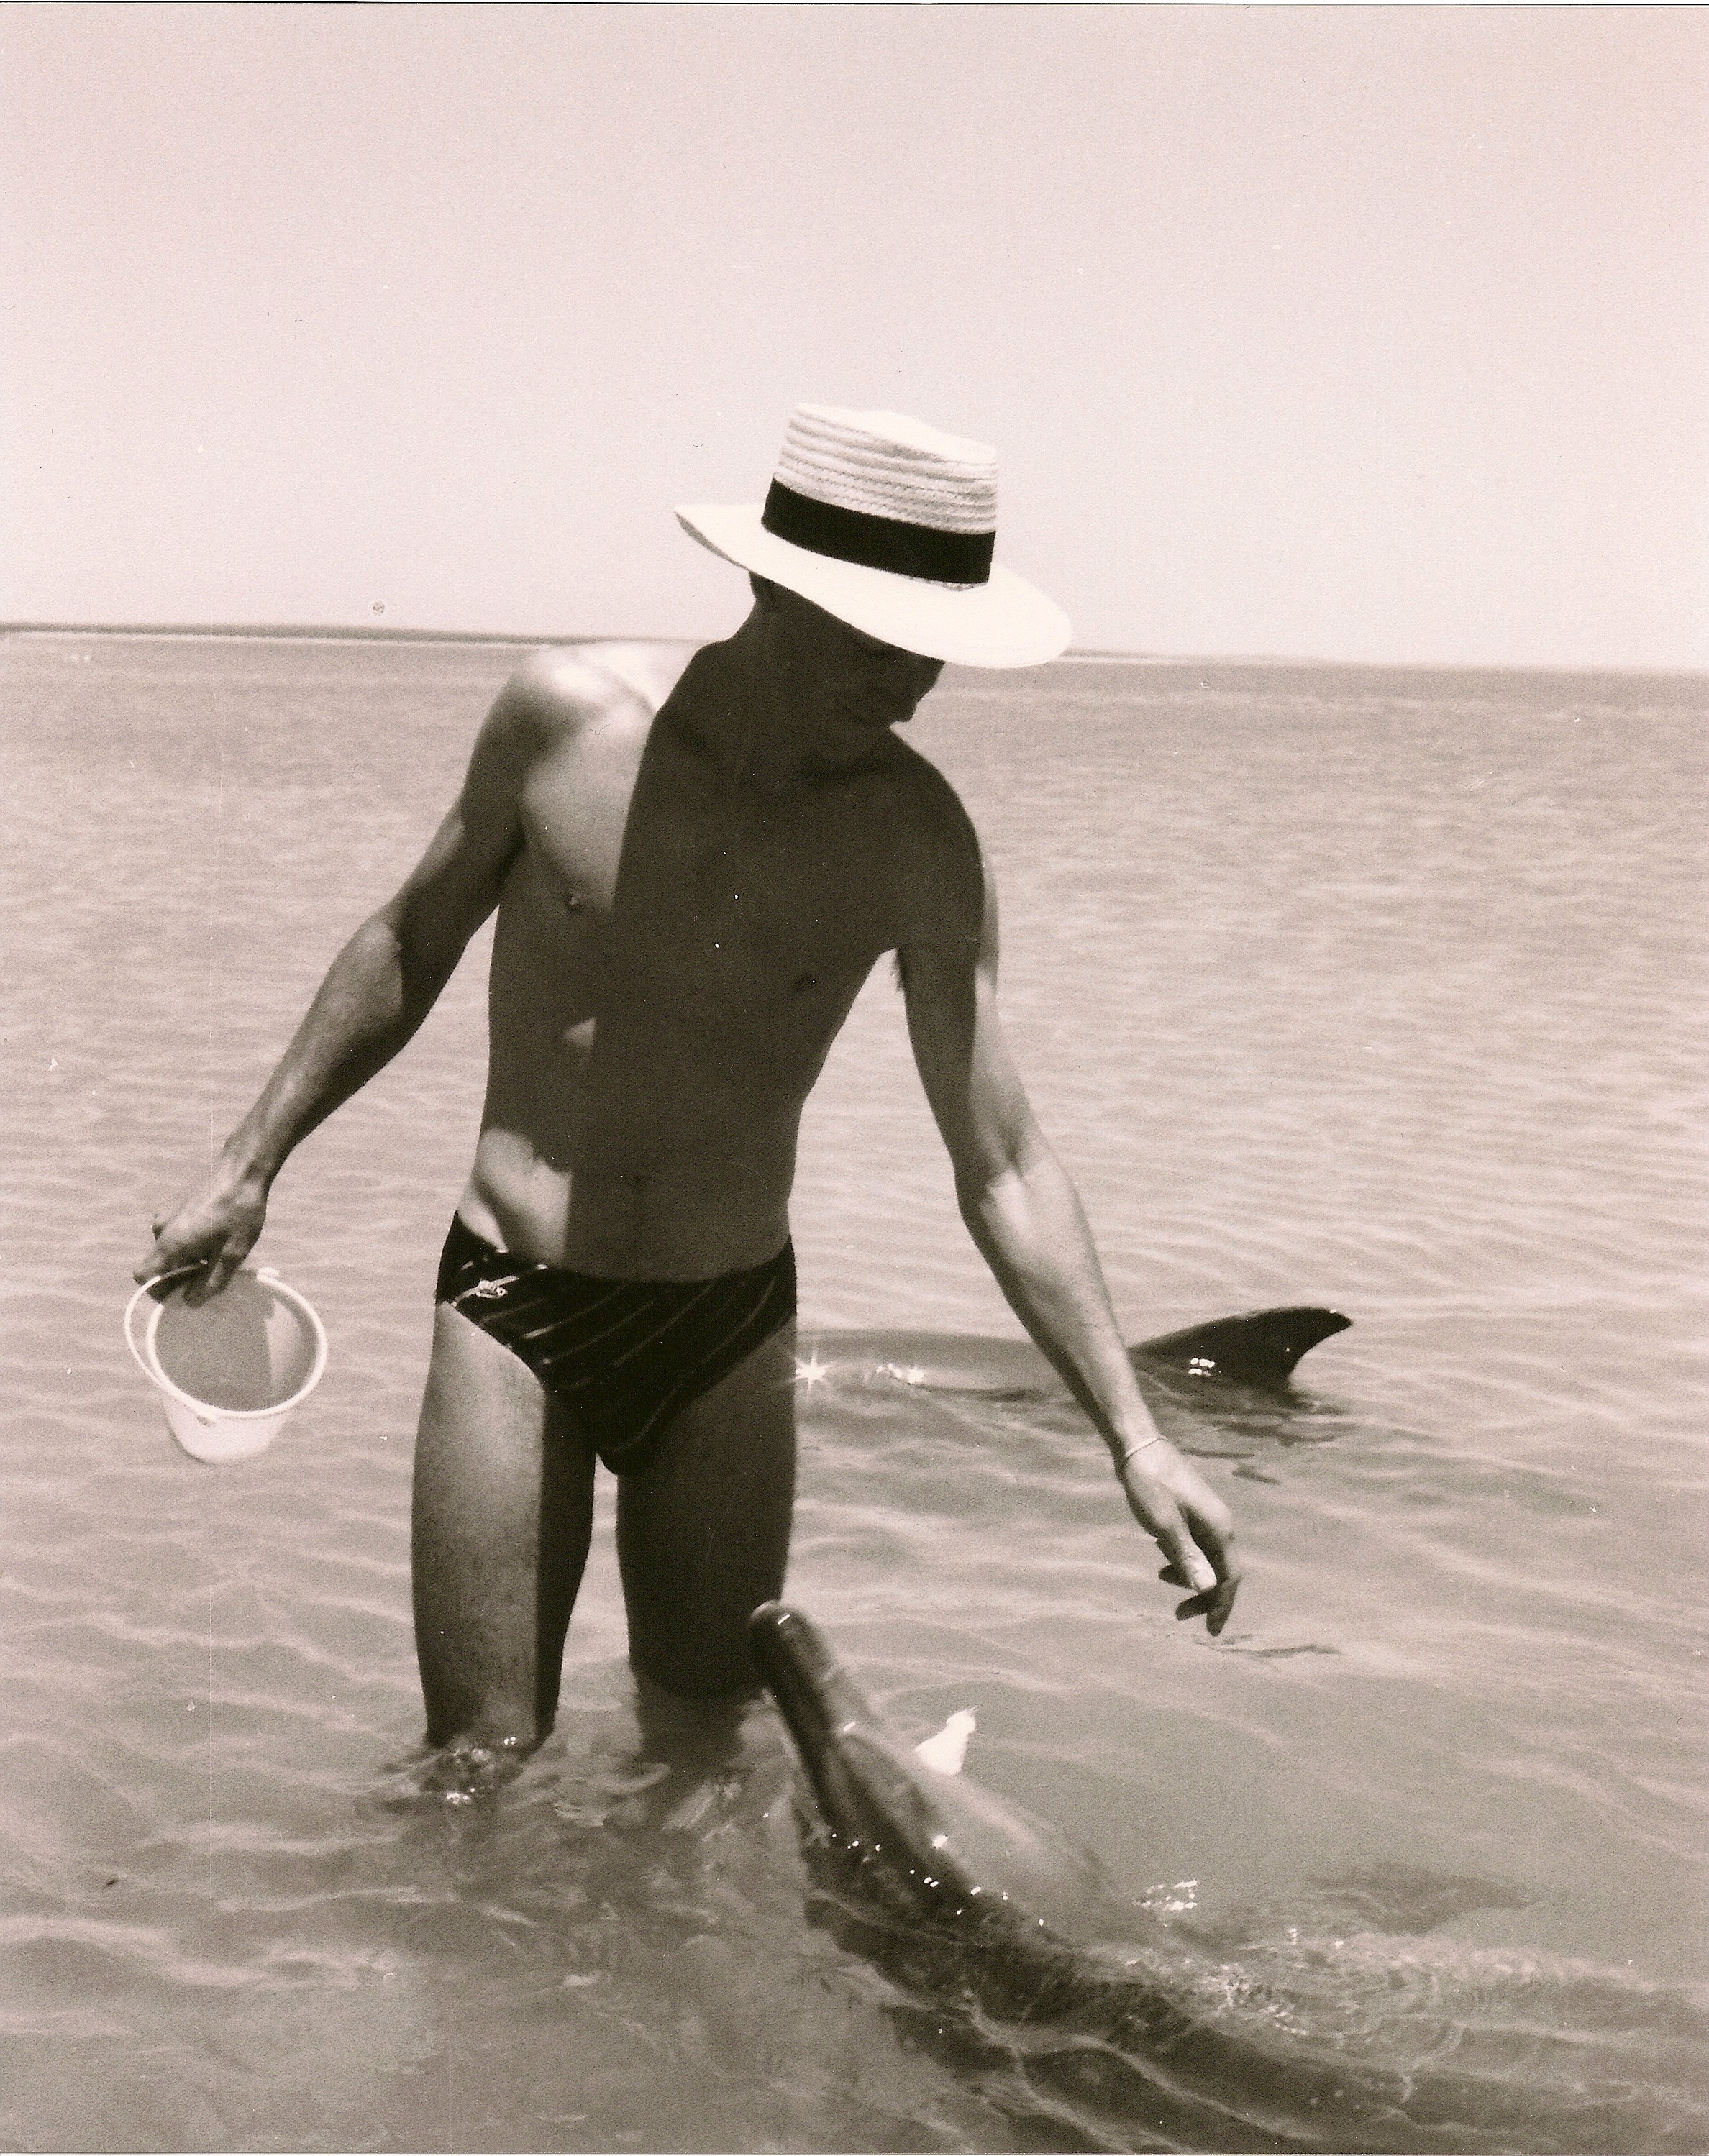 Clinton Morgan at Monkey Mia, circa 1986. Dolphins still come to the shore to this day.